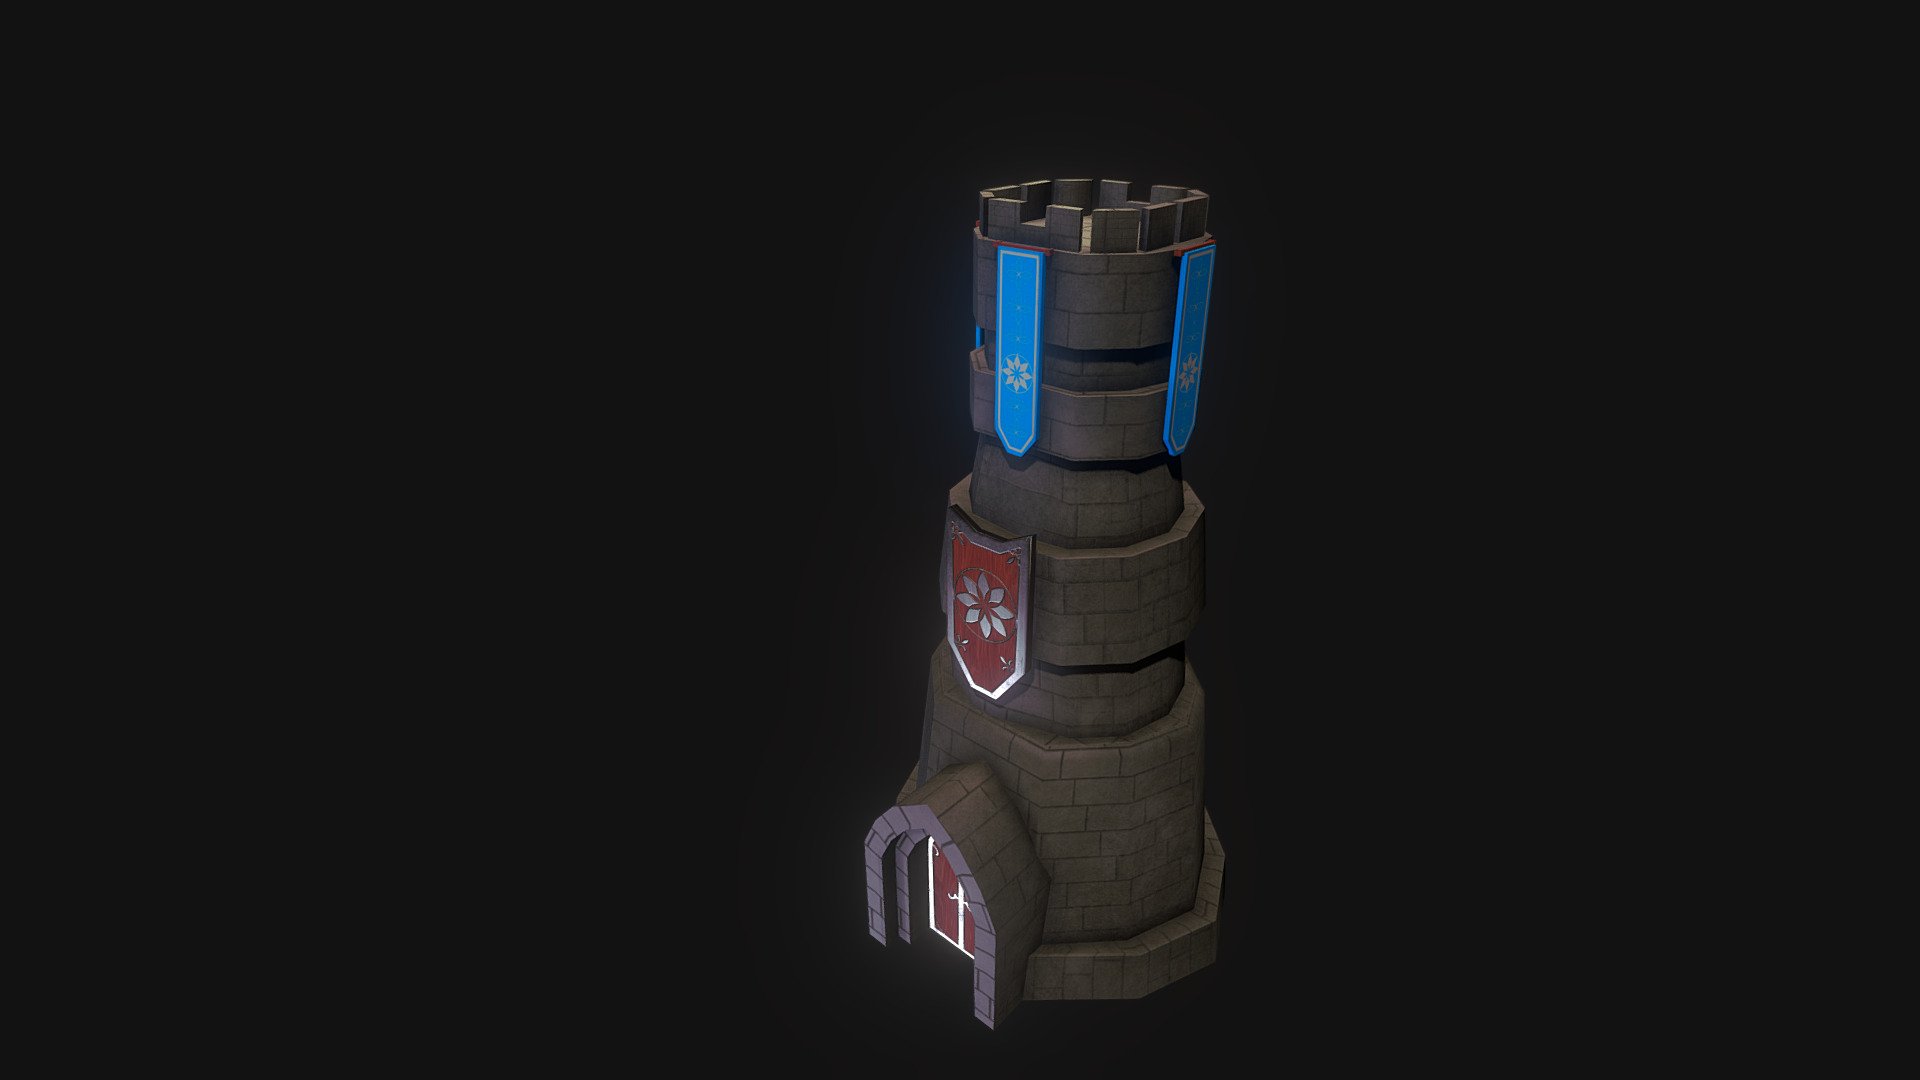 made using blender, Substance Painter. Cool model for those fantasy medieval tower defense games 3d model